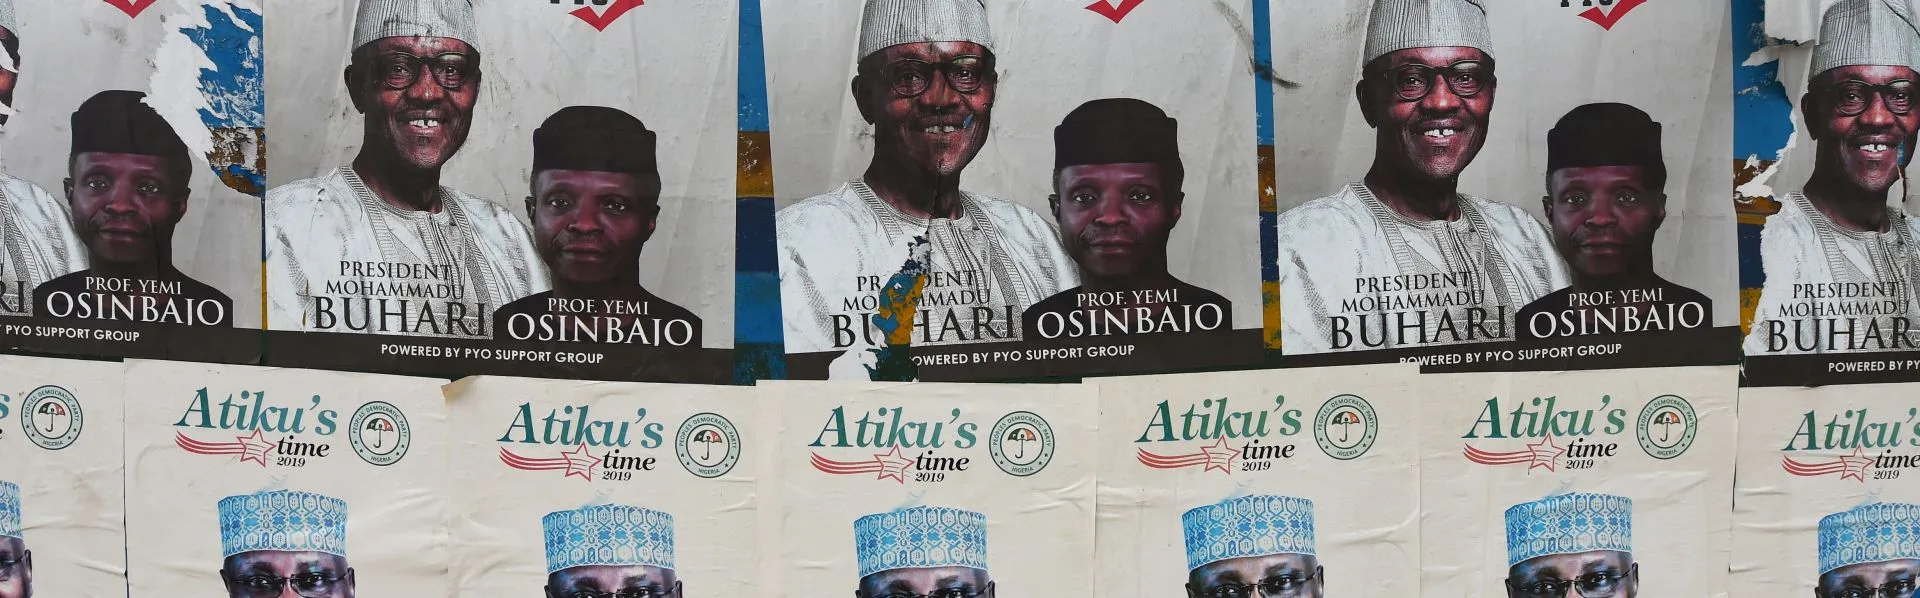 nigeria-buhari-abubakar-election